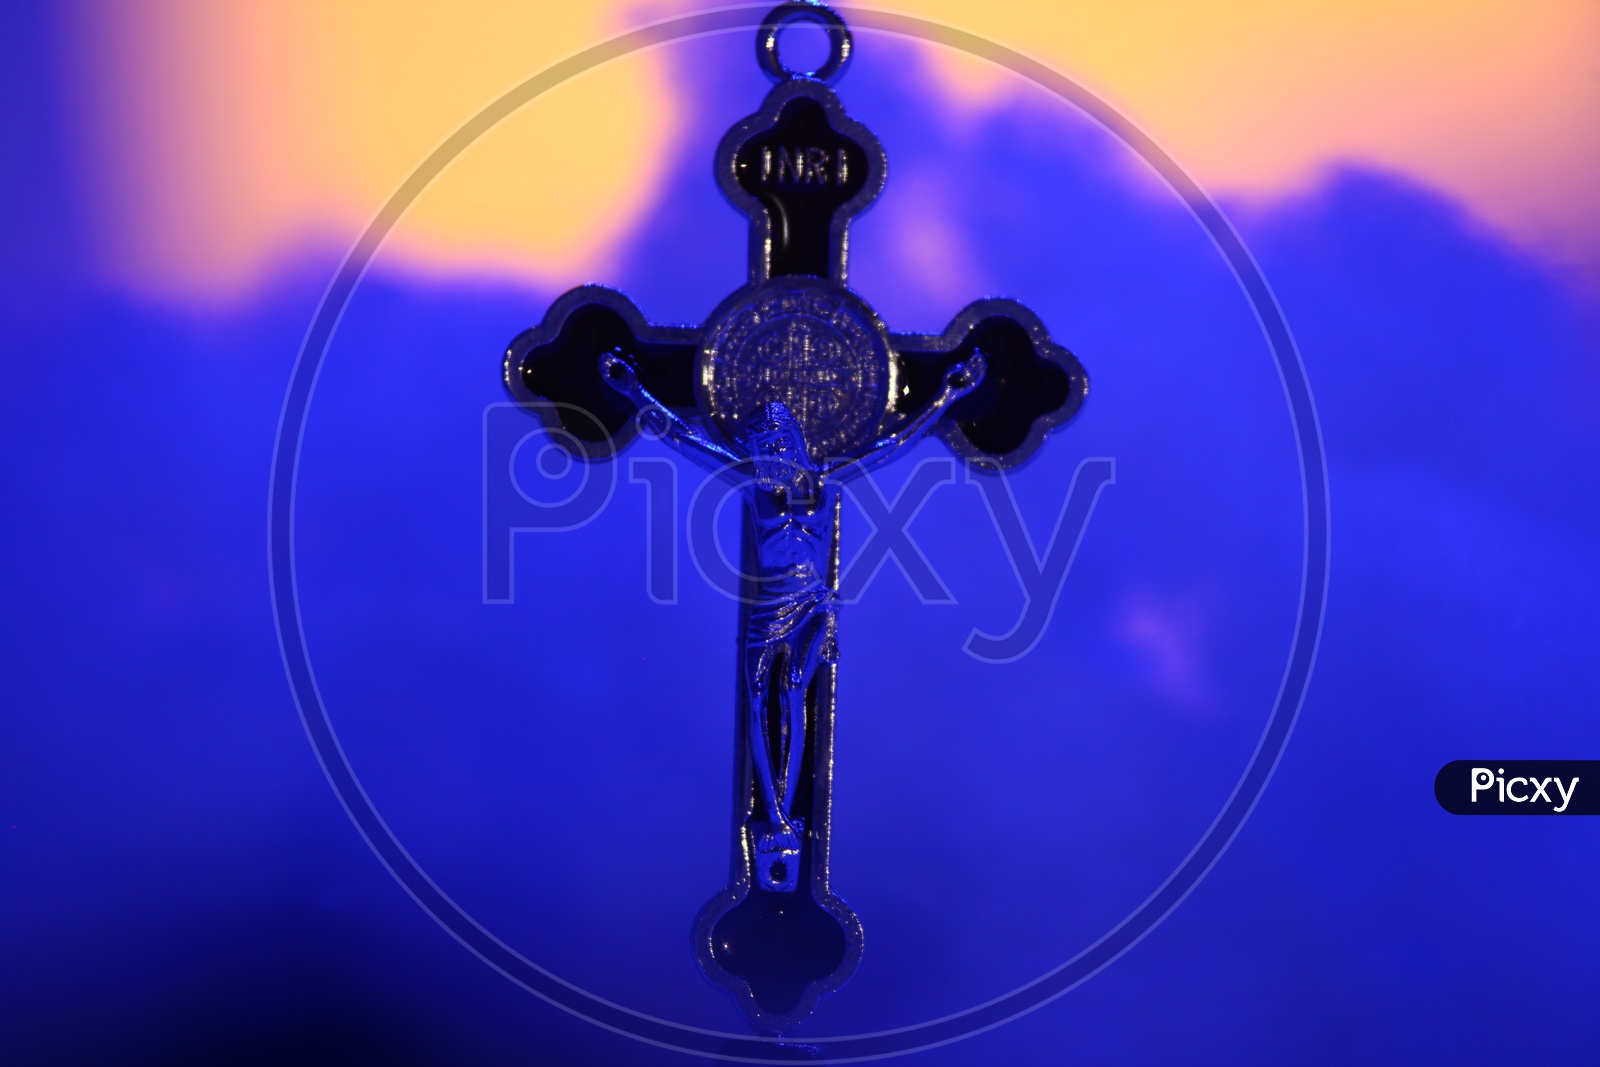 Christian religious symbol of a Jesus